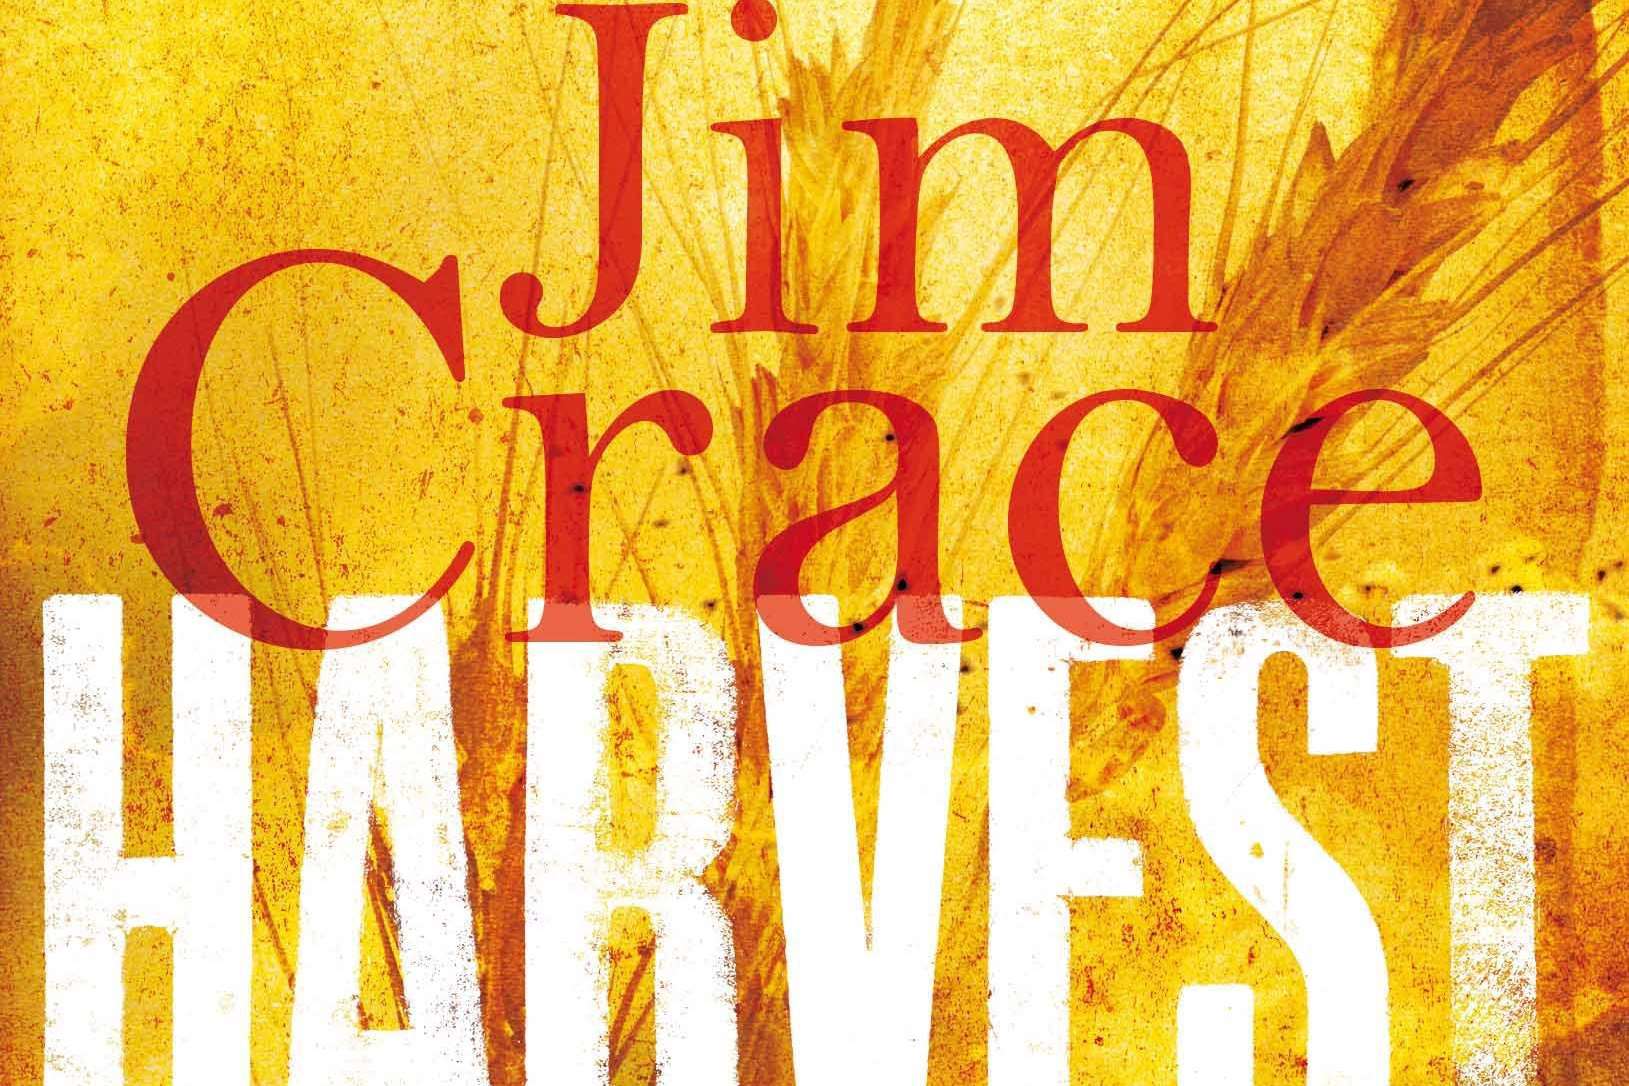 Harvest by Jim Crace